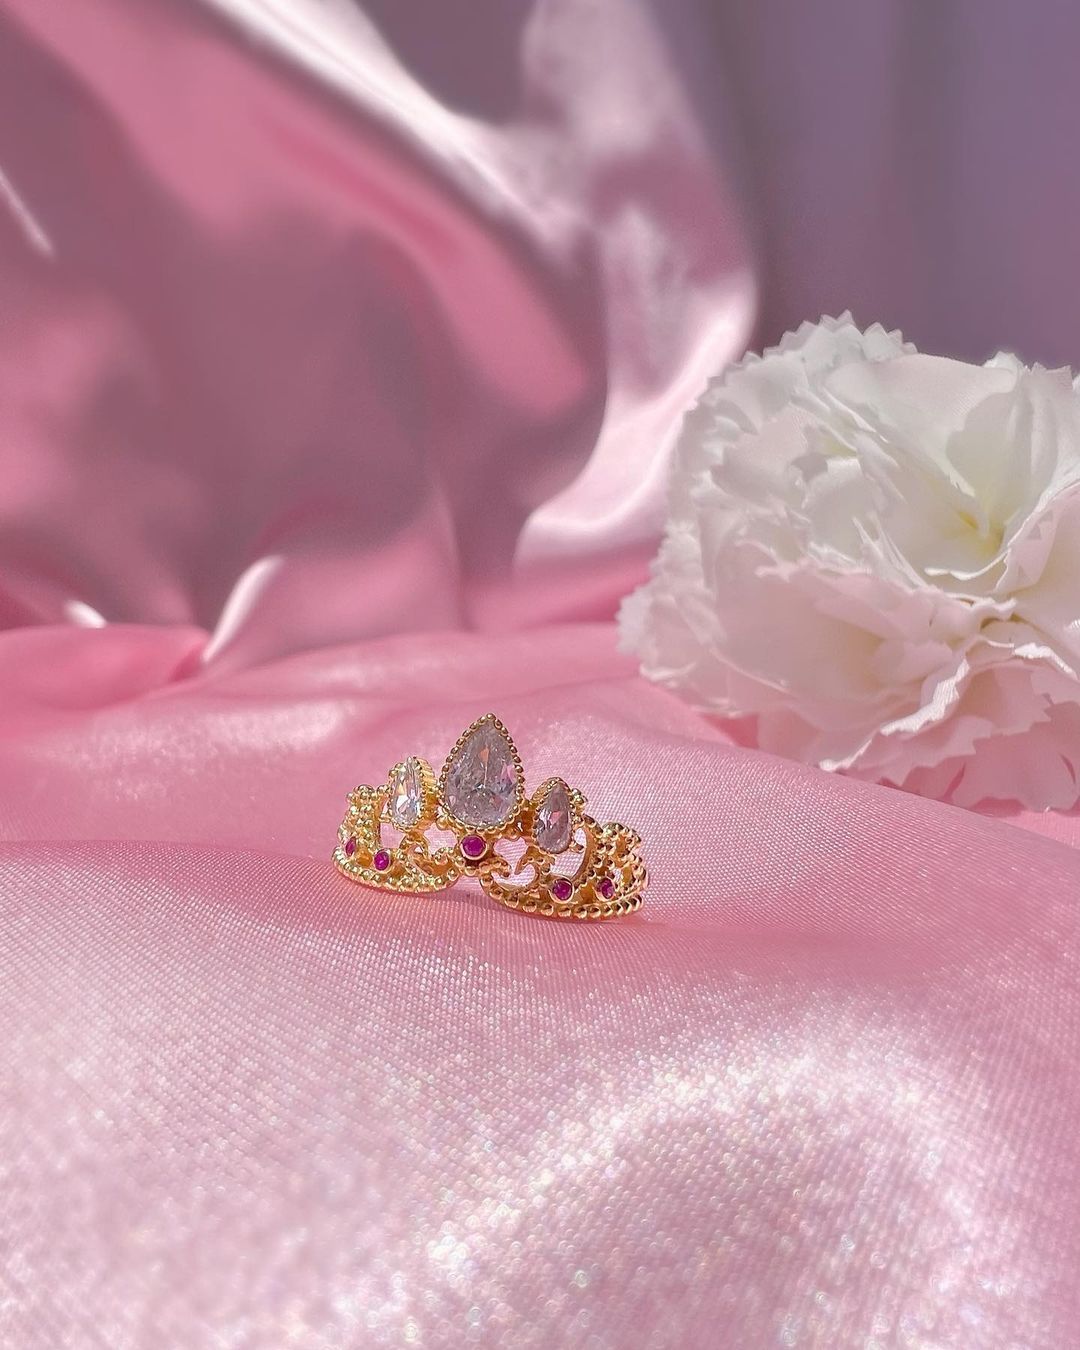 Rapunzel Crown Ring,Princess Jewelry, 925 Sterling Silver Ring, Princess Crown Engagement Ring, Geek Jewelry, ,925 sterling silver